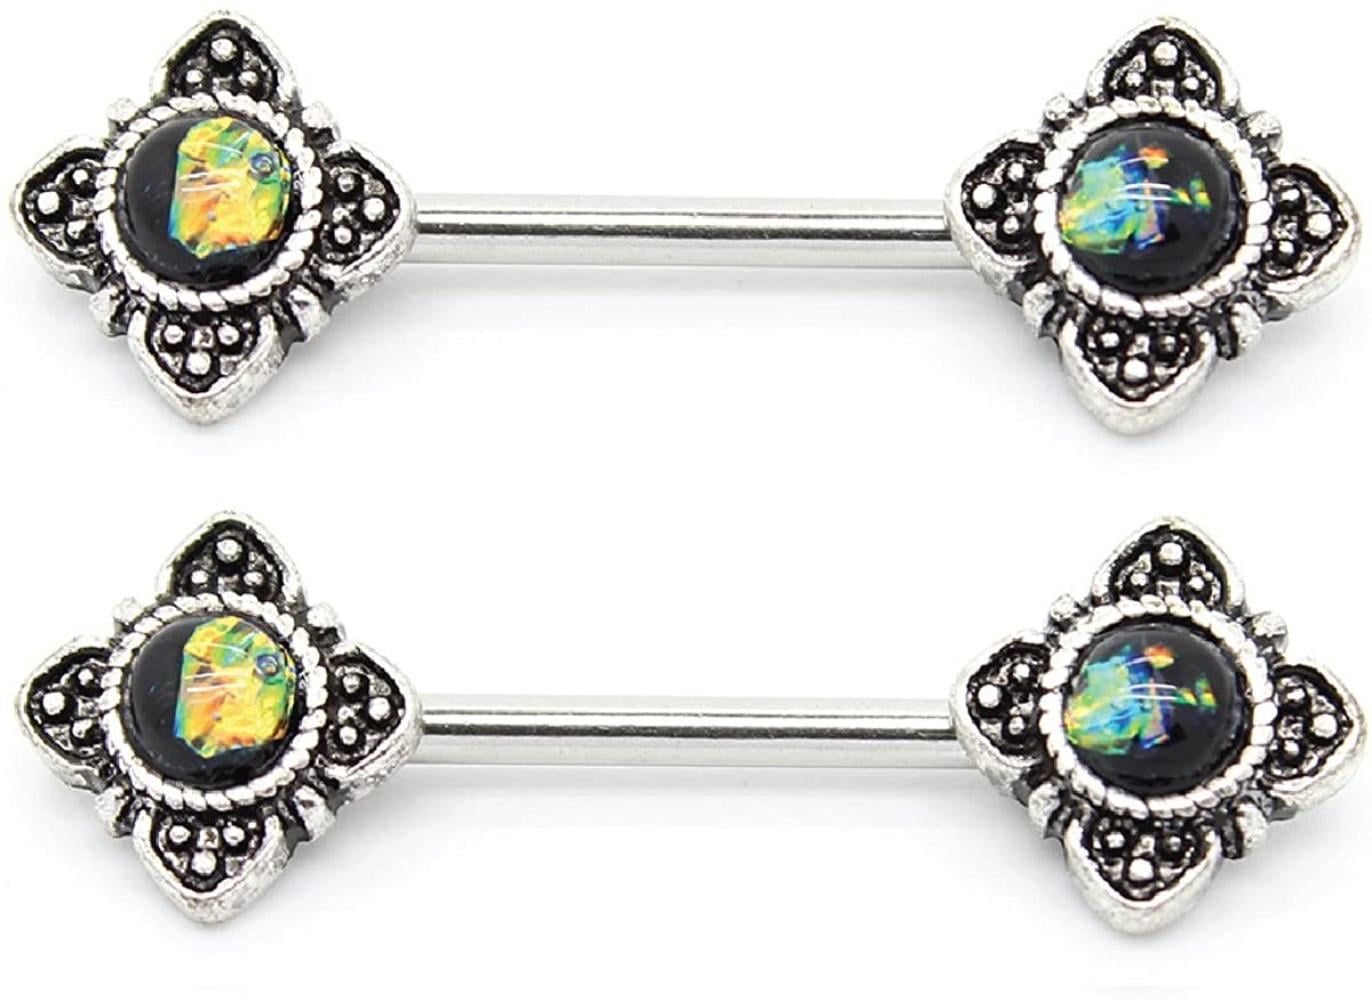 30pcs Body Jewelry 14G Opal Stone Heart Tongue Ring Nipple Shield Bar Barbells